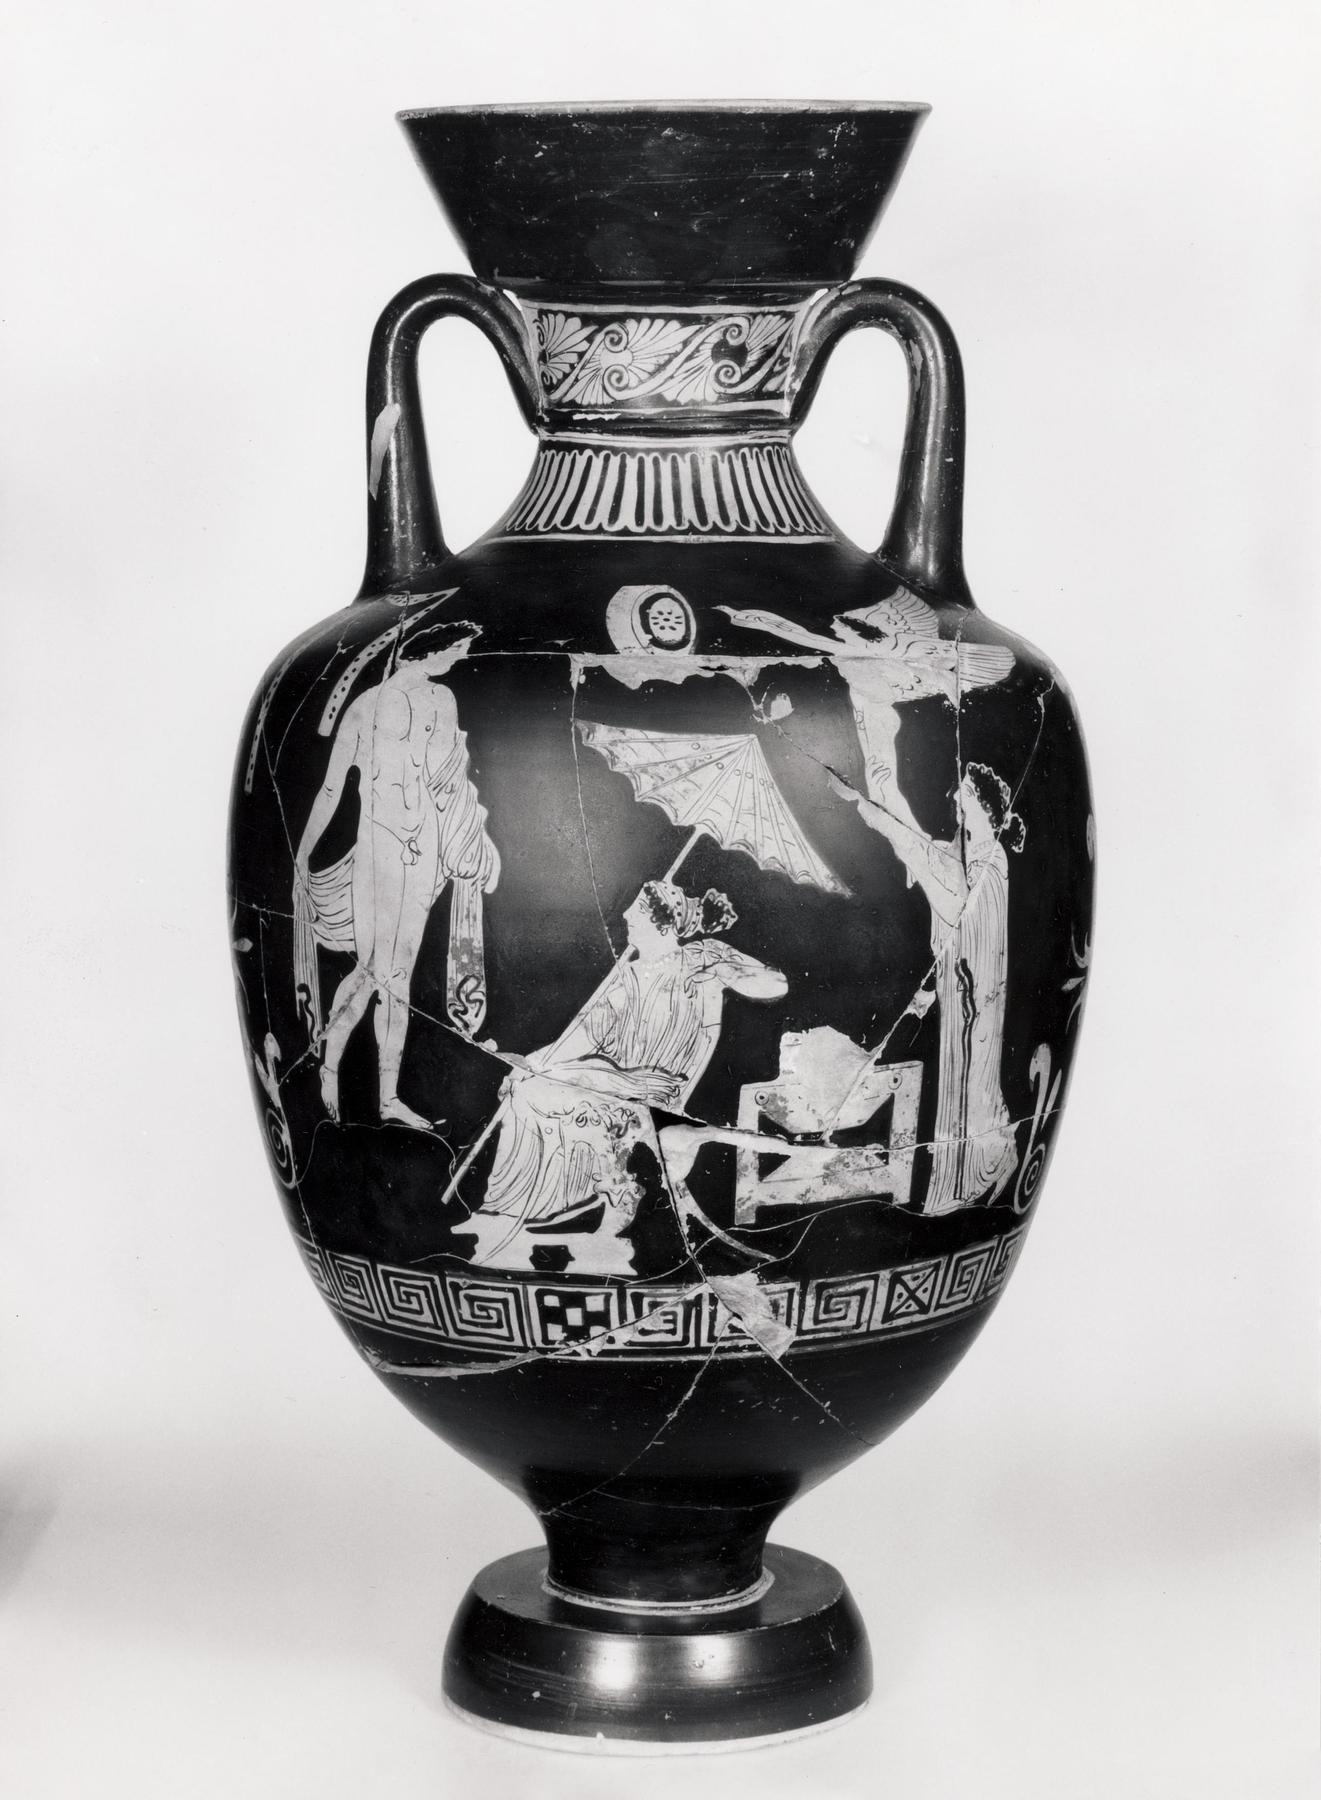 Amphora with bridal scenes (A, B), H630